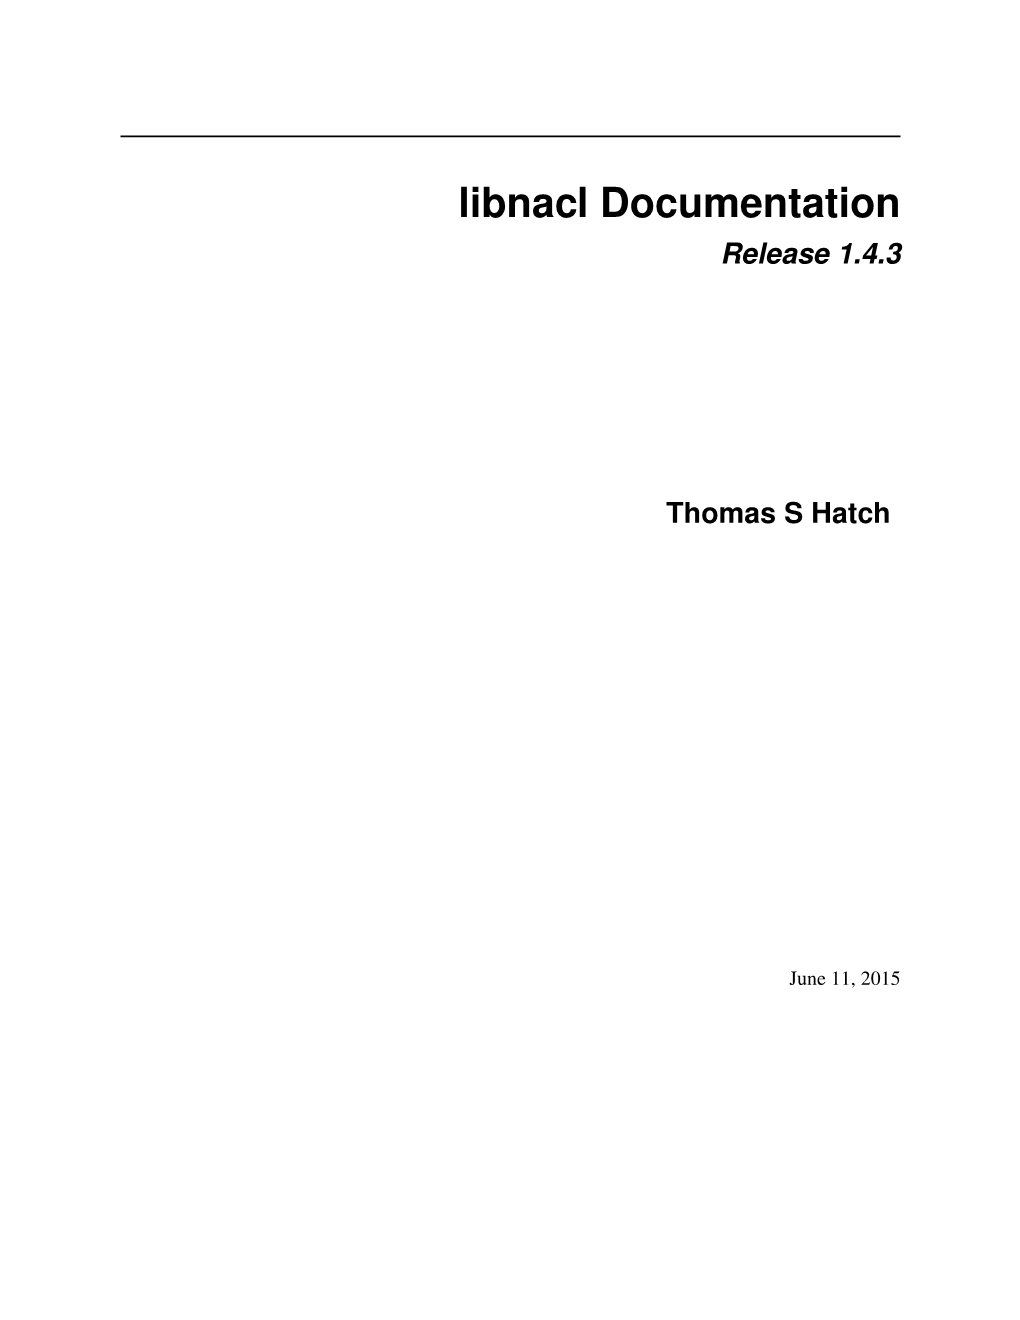 Libnacl Documentation Release 1.4.3